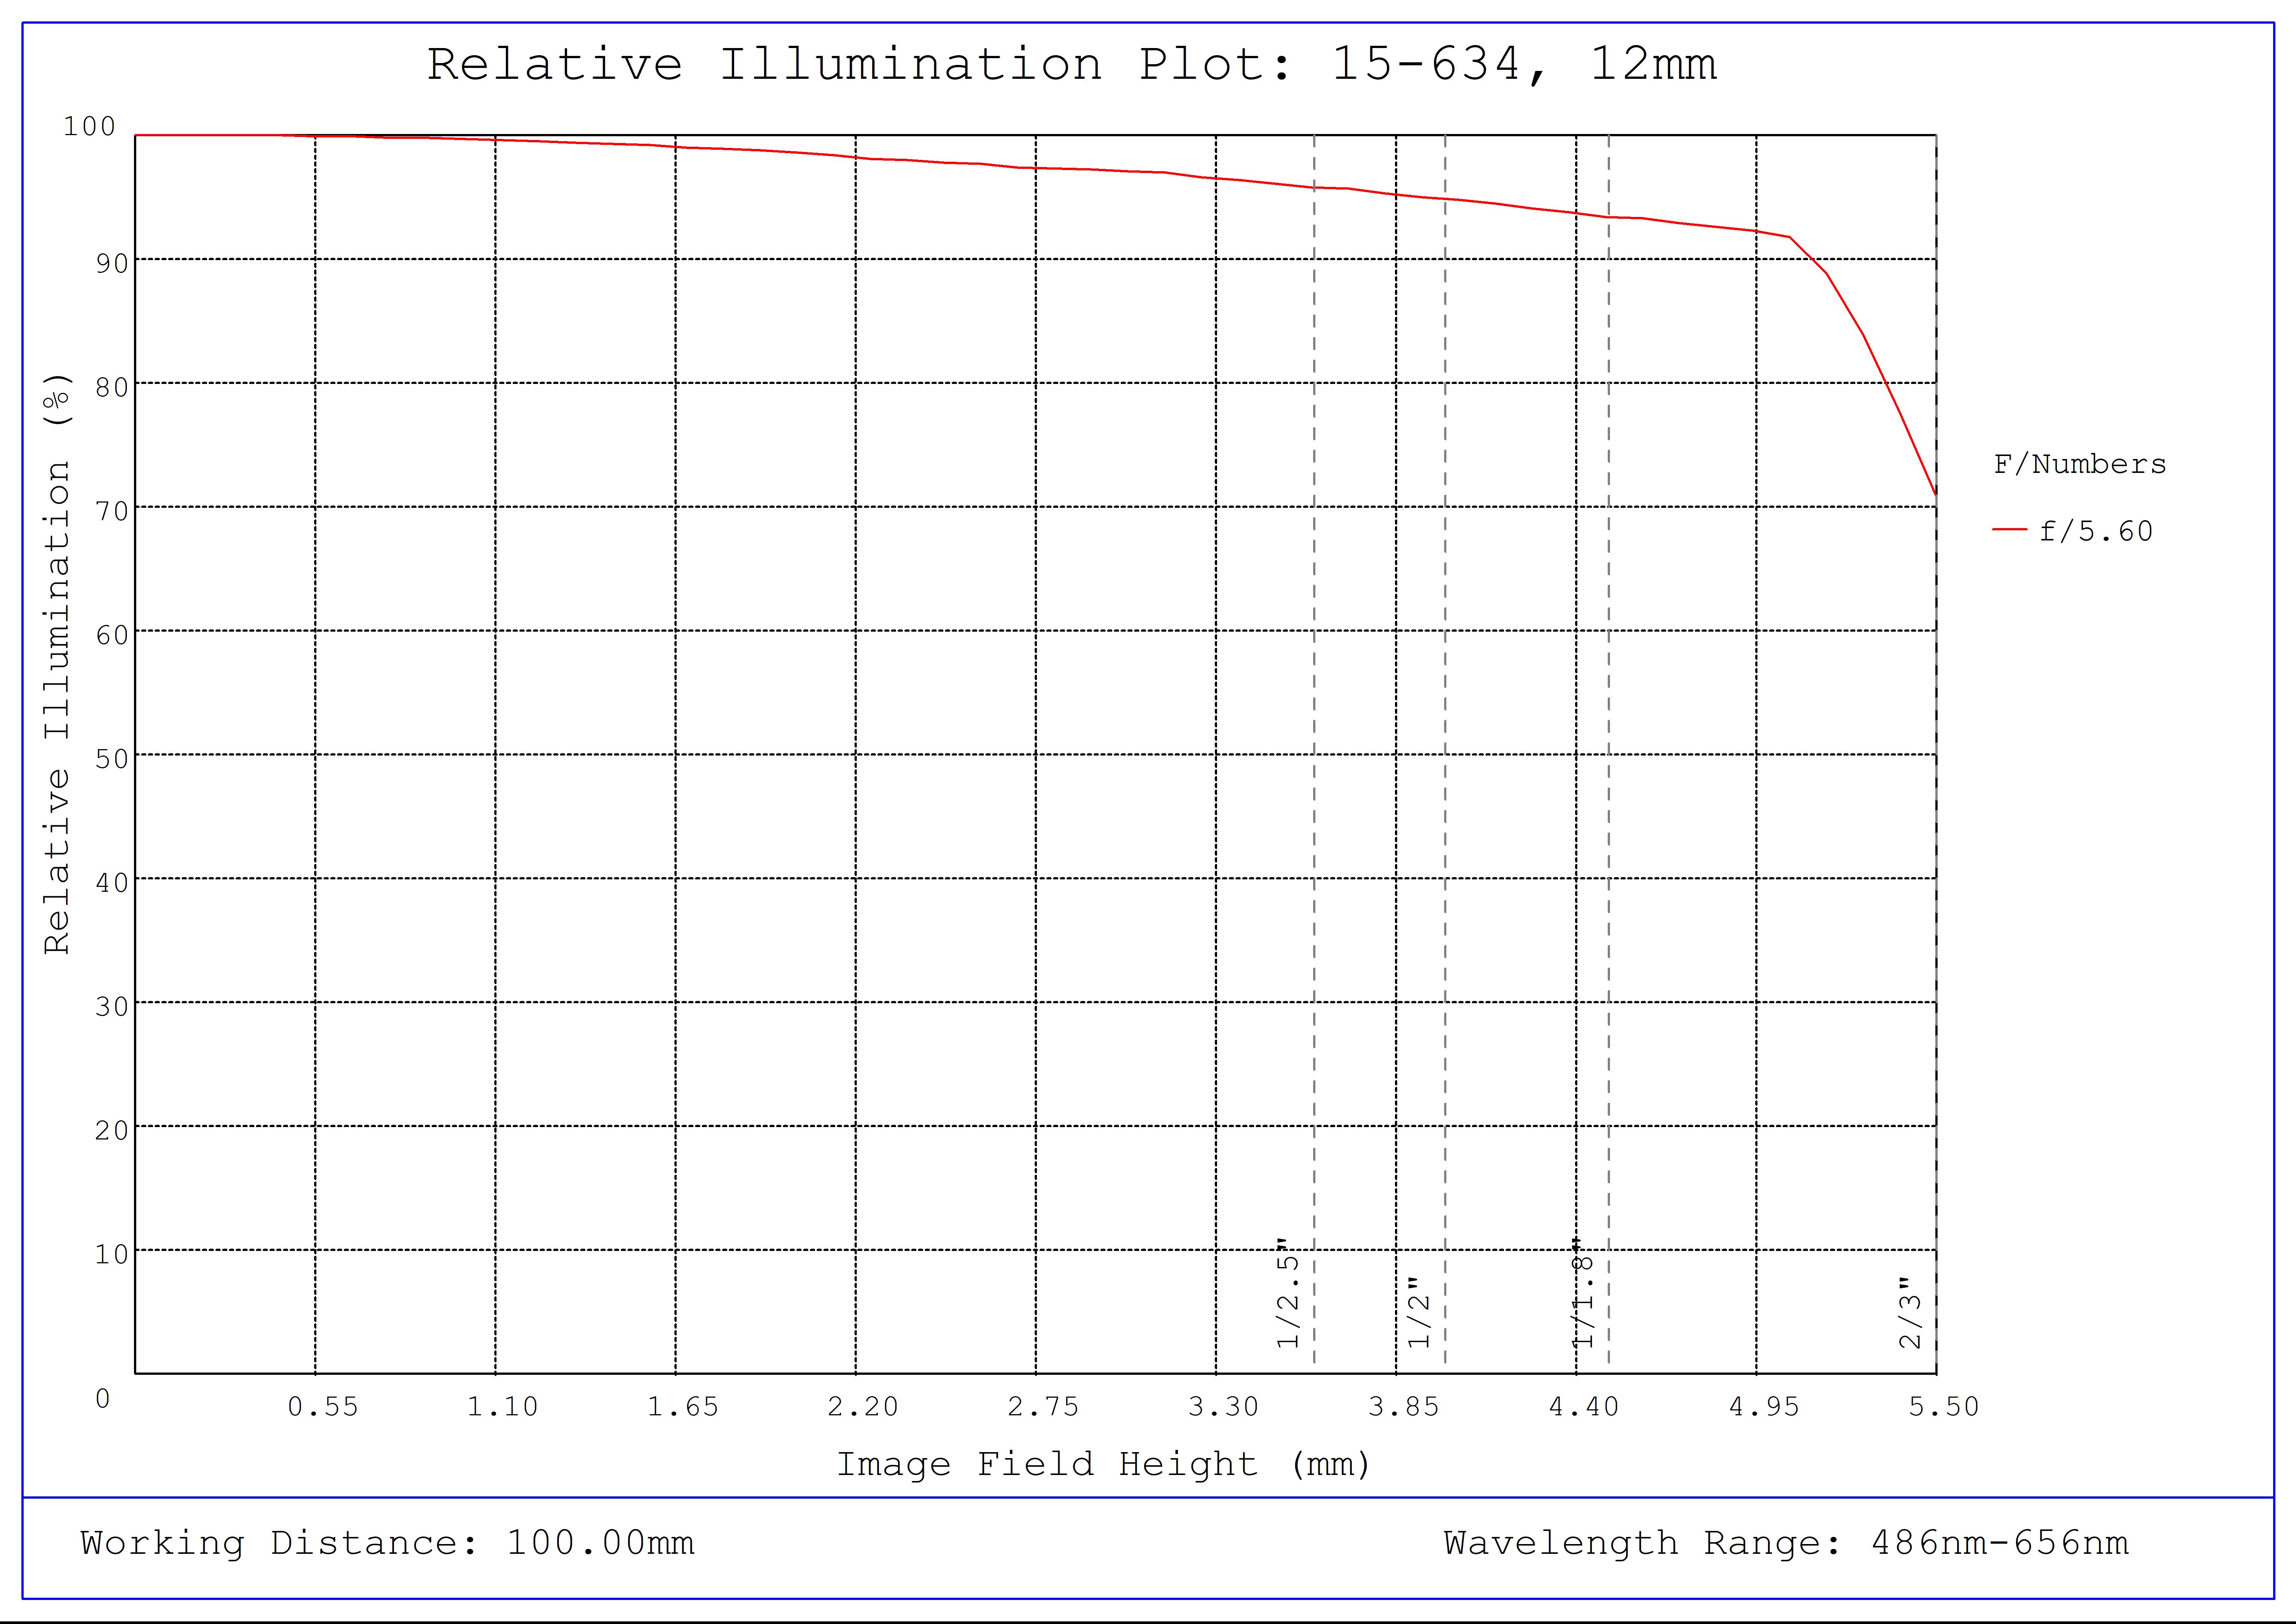 #15-634, 12mm, f/5.6 Cw Series Fixed Focal Length Lens, Relative Illumination Plot